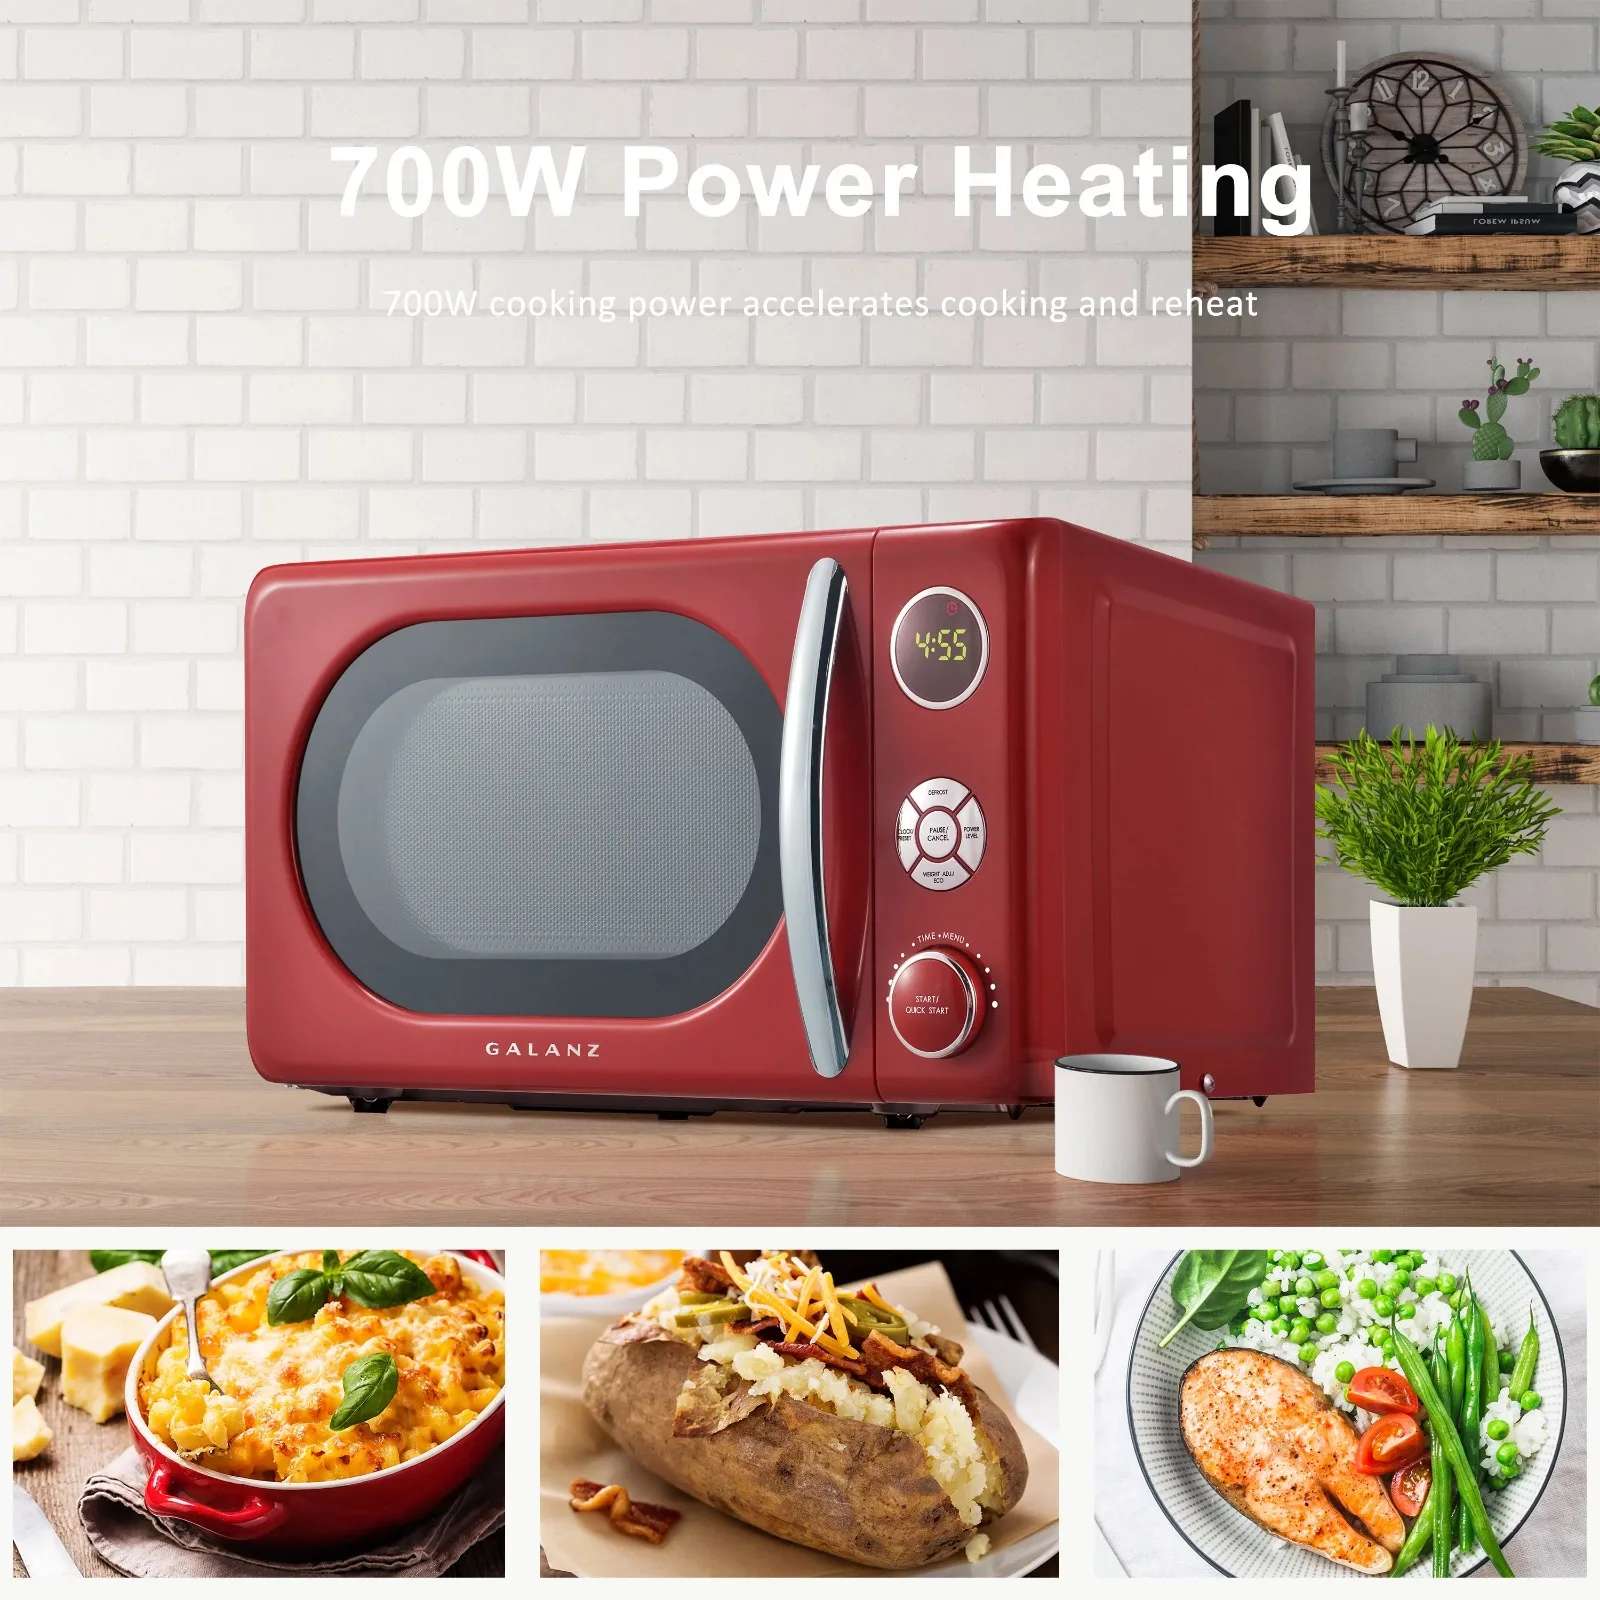 https://ae01.alicdn.com/kf/S13c236da46654bed8218fe622bfadd41T/0-7-cu-ft-Retro-Countertop-Microwave-Oven-700-Watts-Red-USA-NEW.jpg